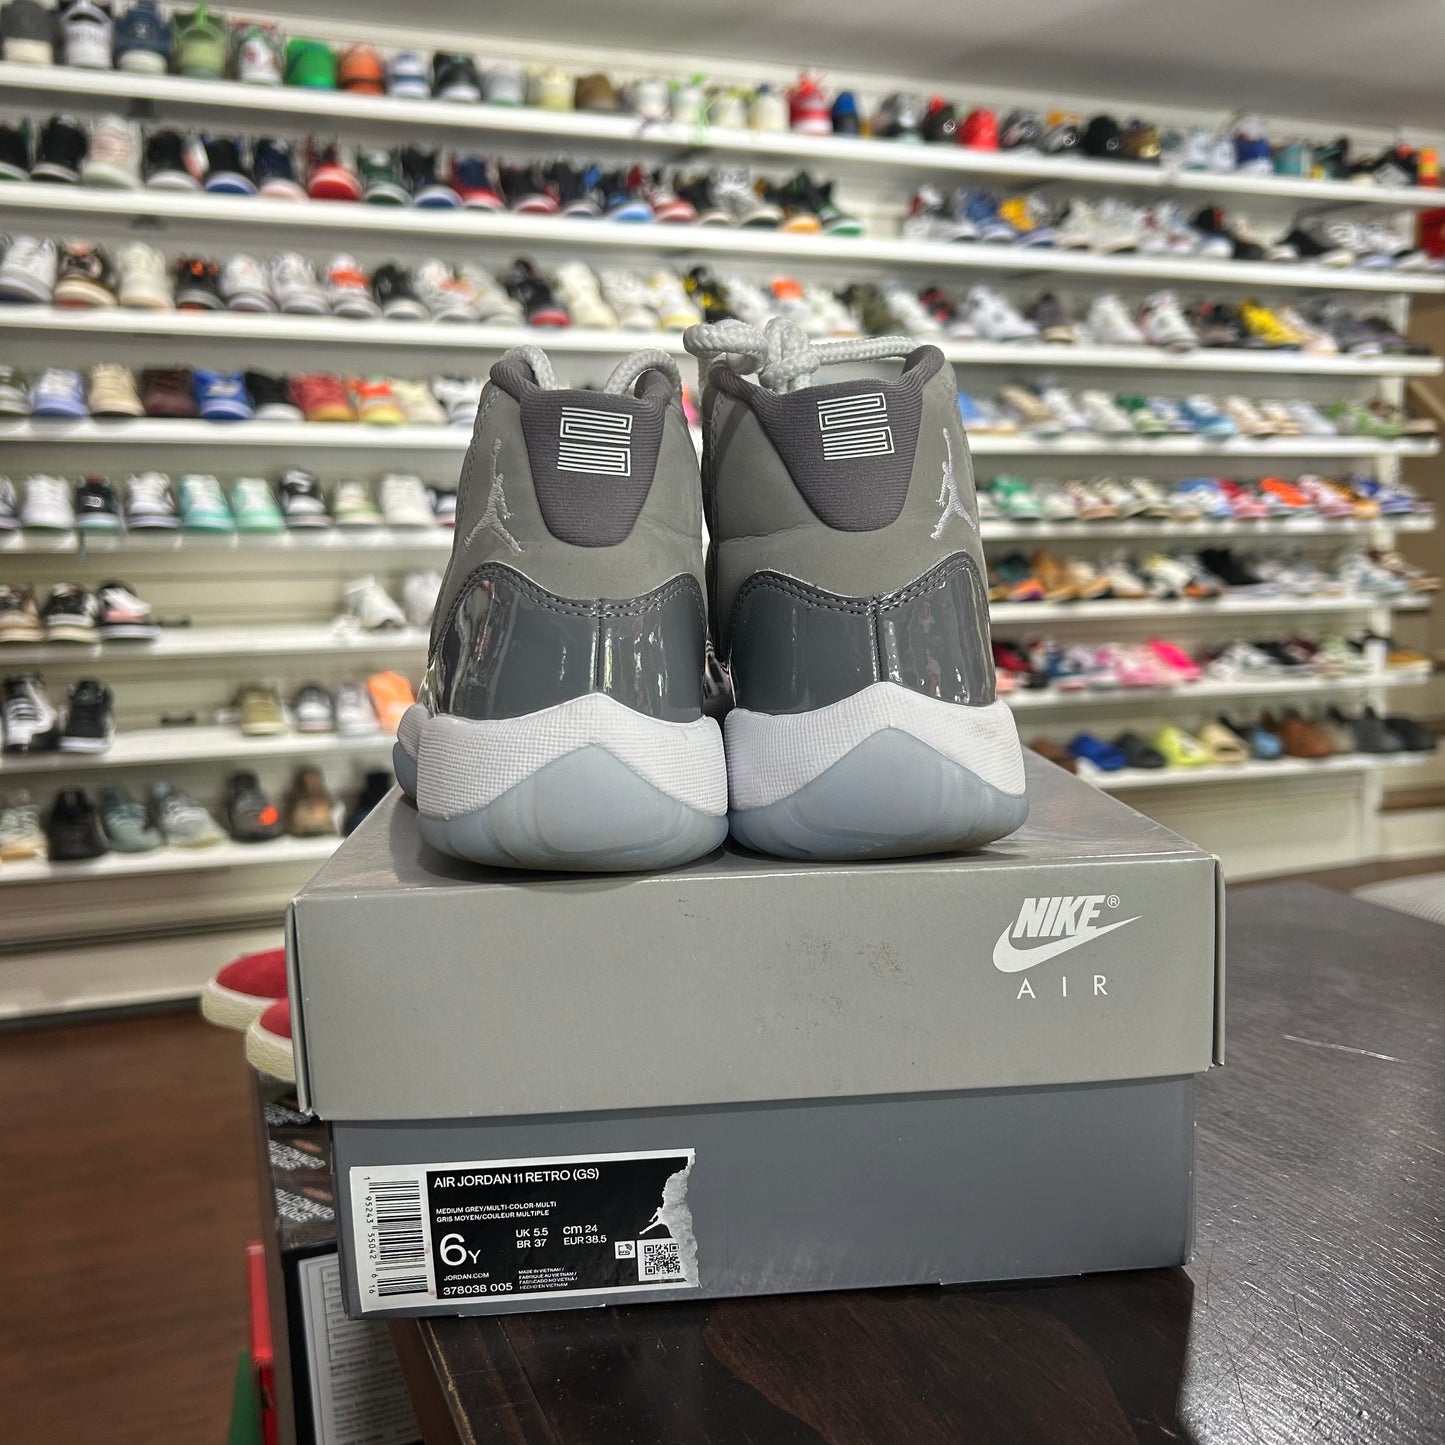 *USED* Air Jordan 11 Cool Grey (Size 6Y)